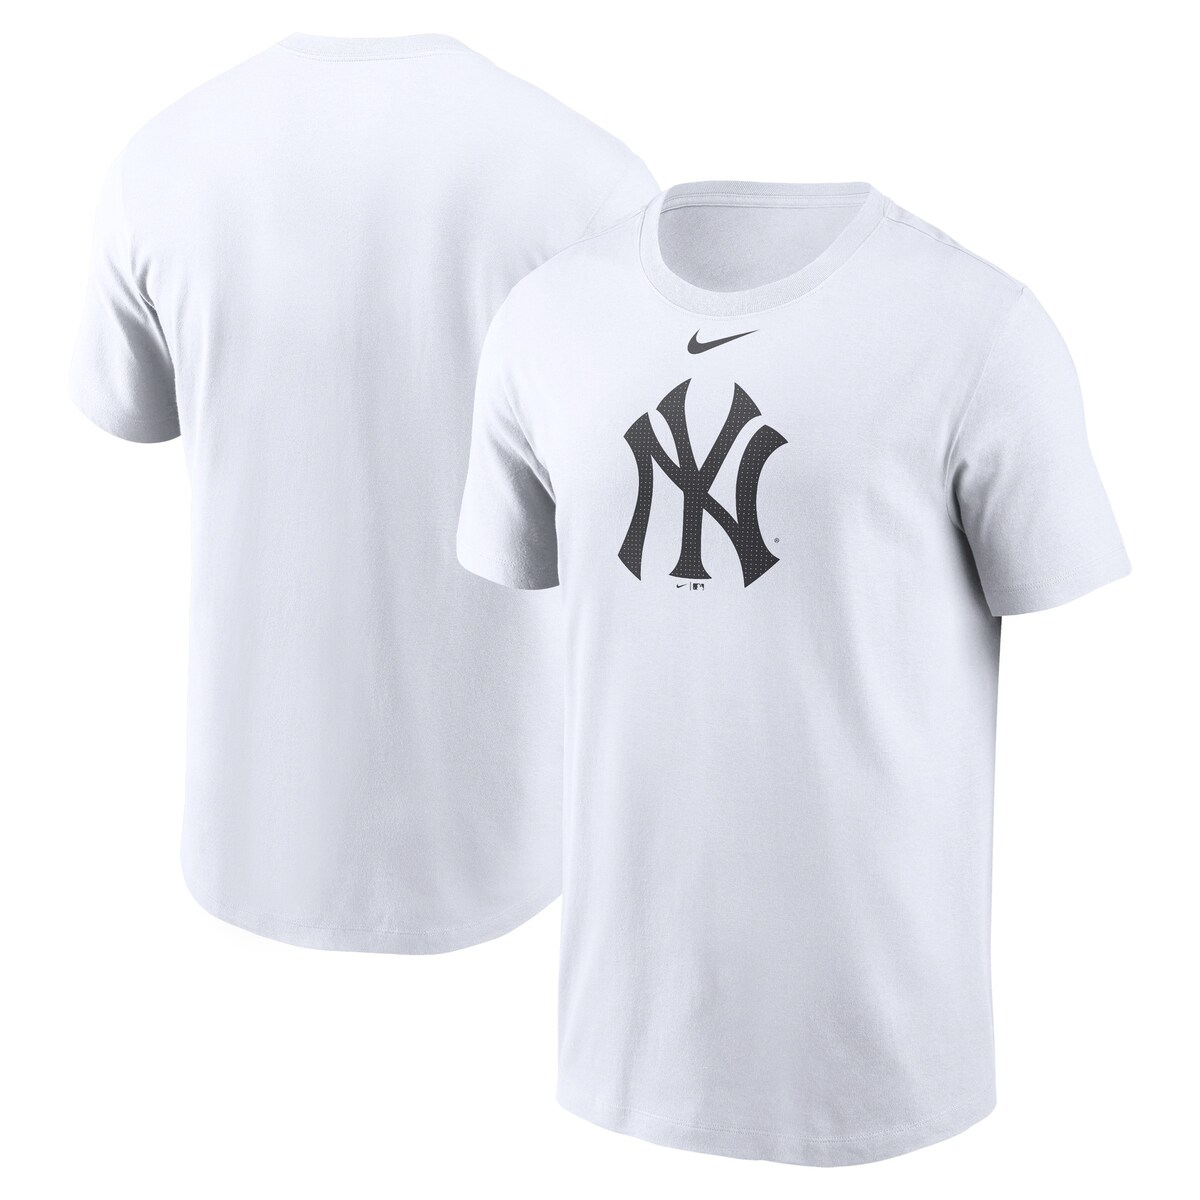 MLB ヤンキース Tシャツ ロゴ入り Nike ナイキ メンズ ホワイト (Men's Nike Fuse Large Logo Cotton Tee SP24)